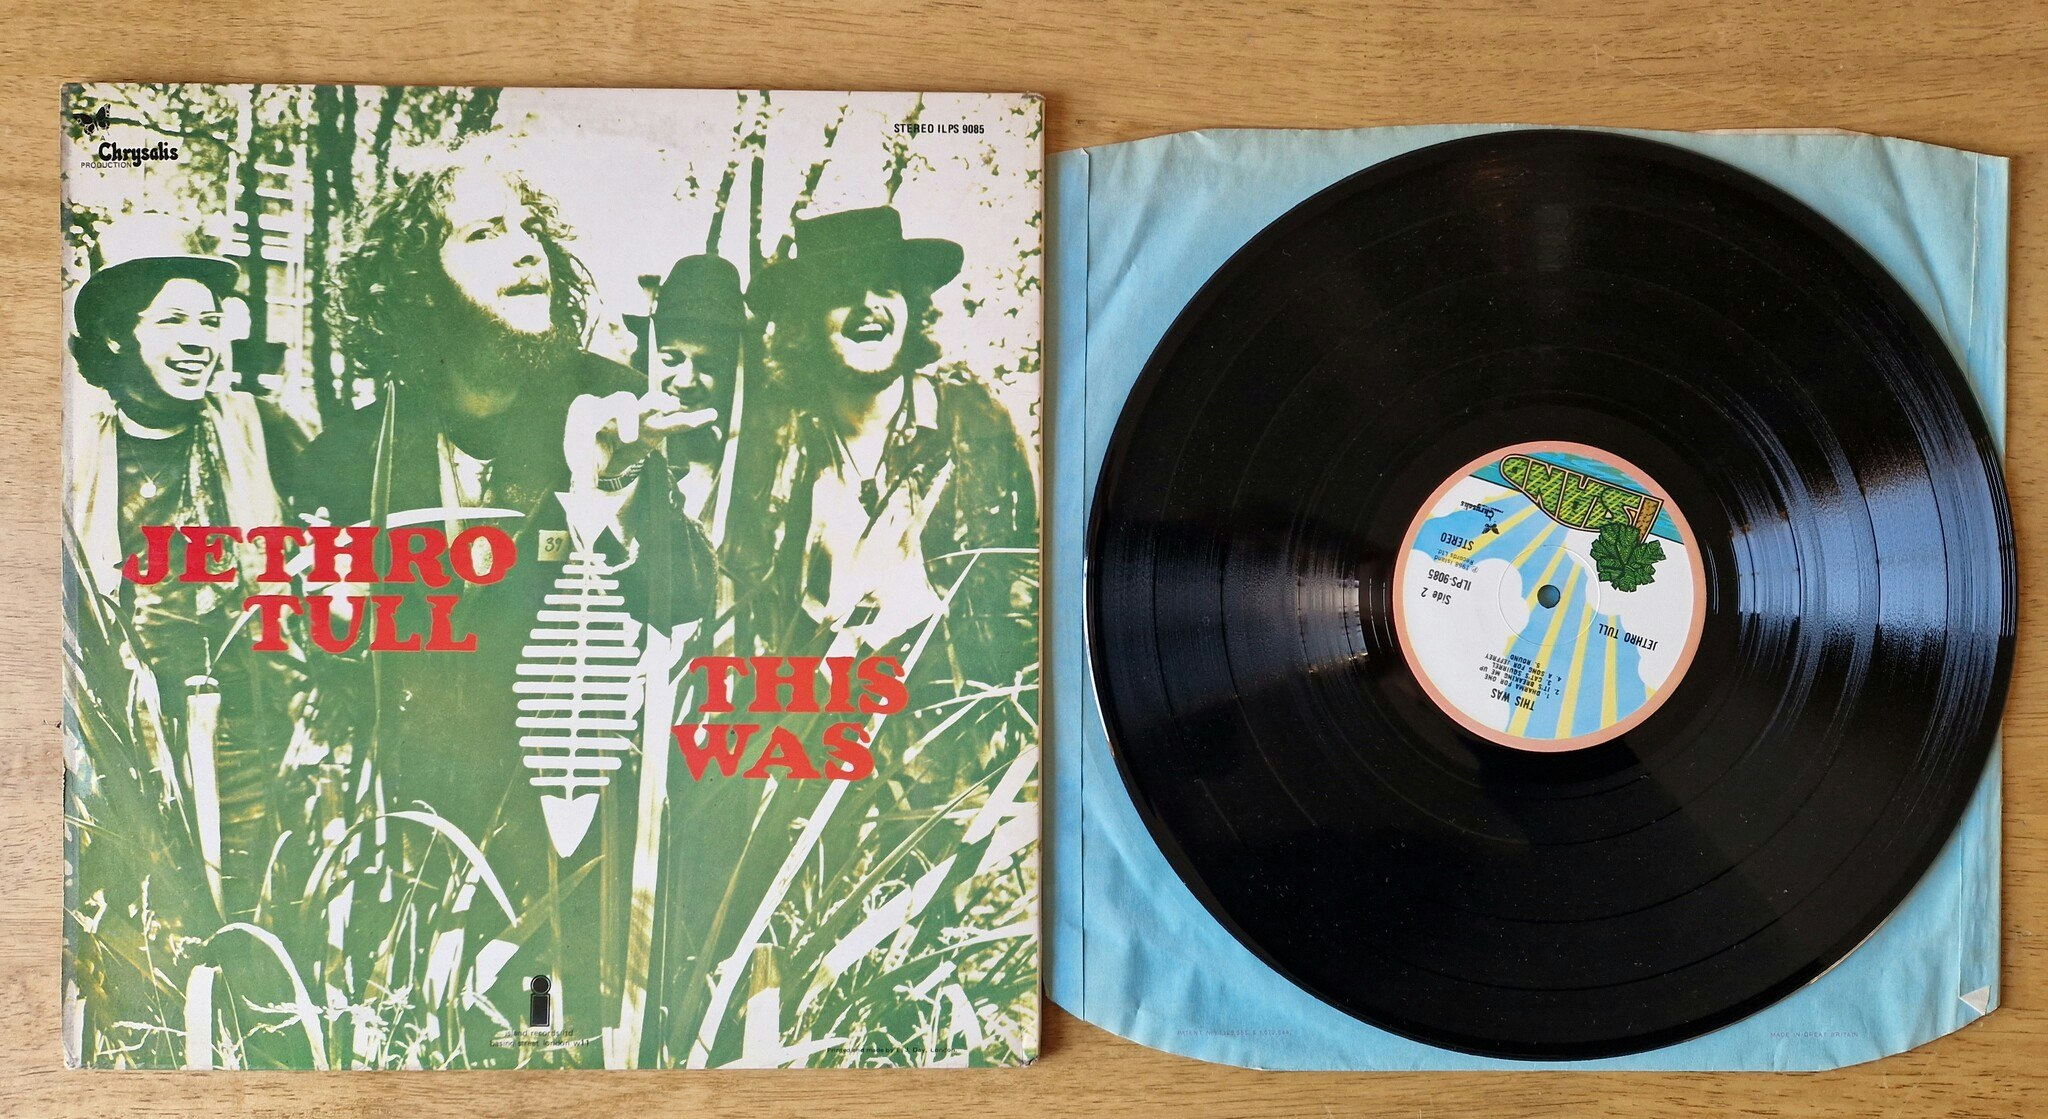 Jethro Tull, This was. Vinyl LP